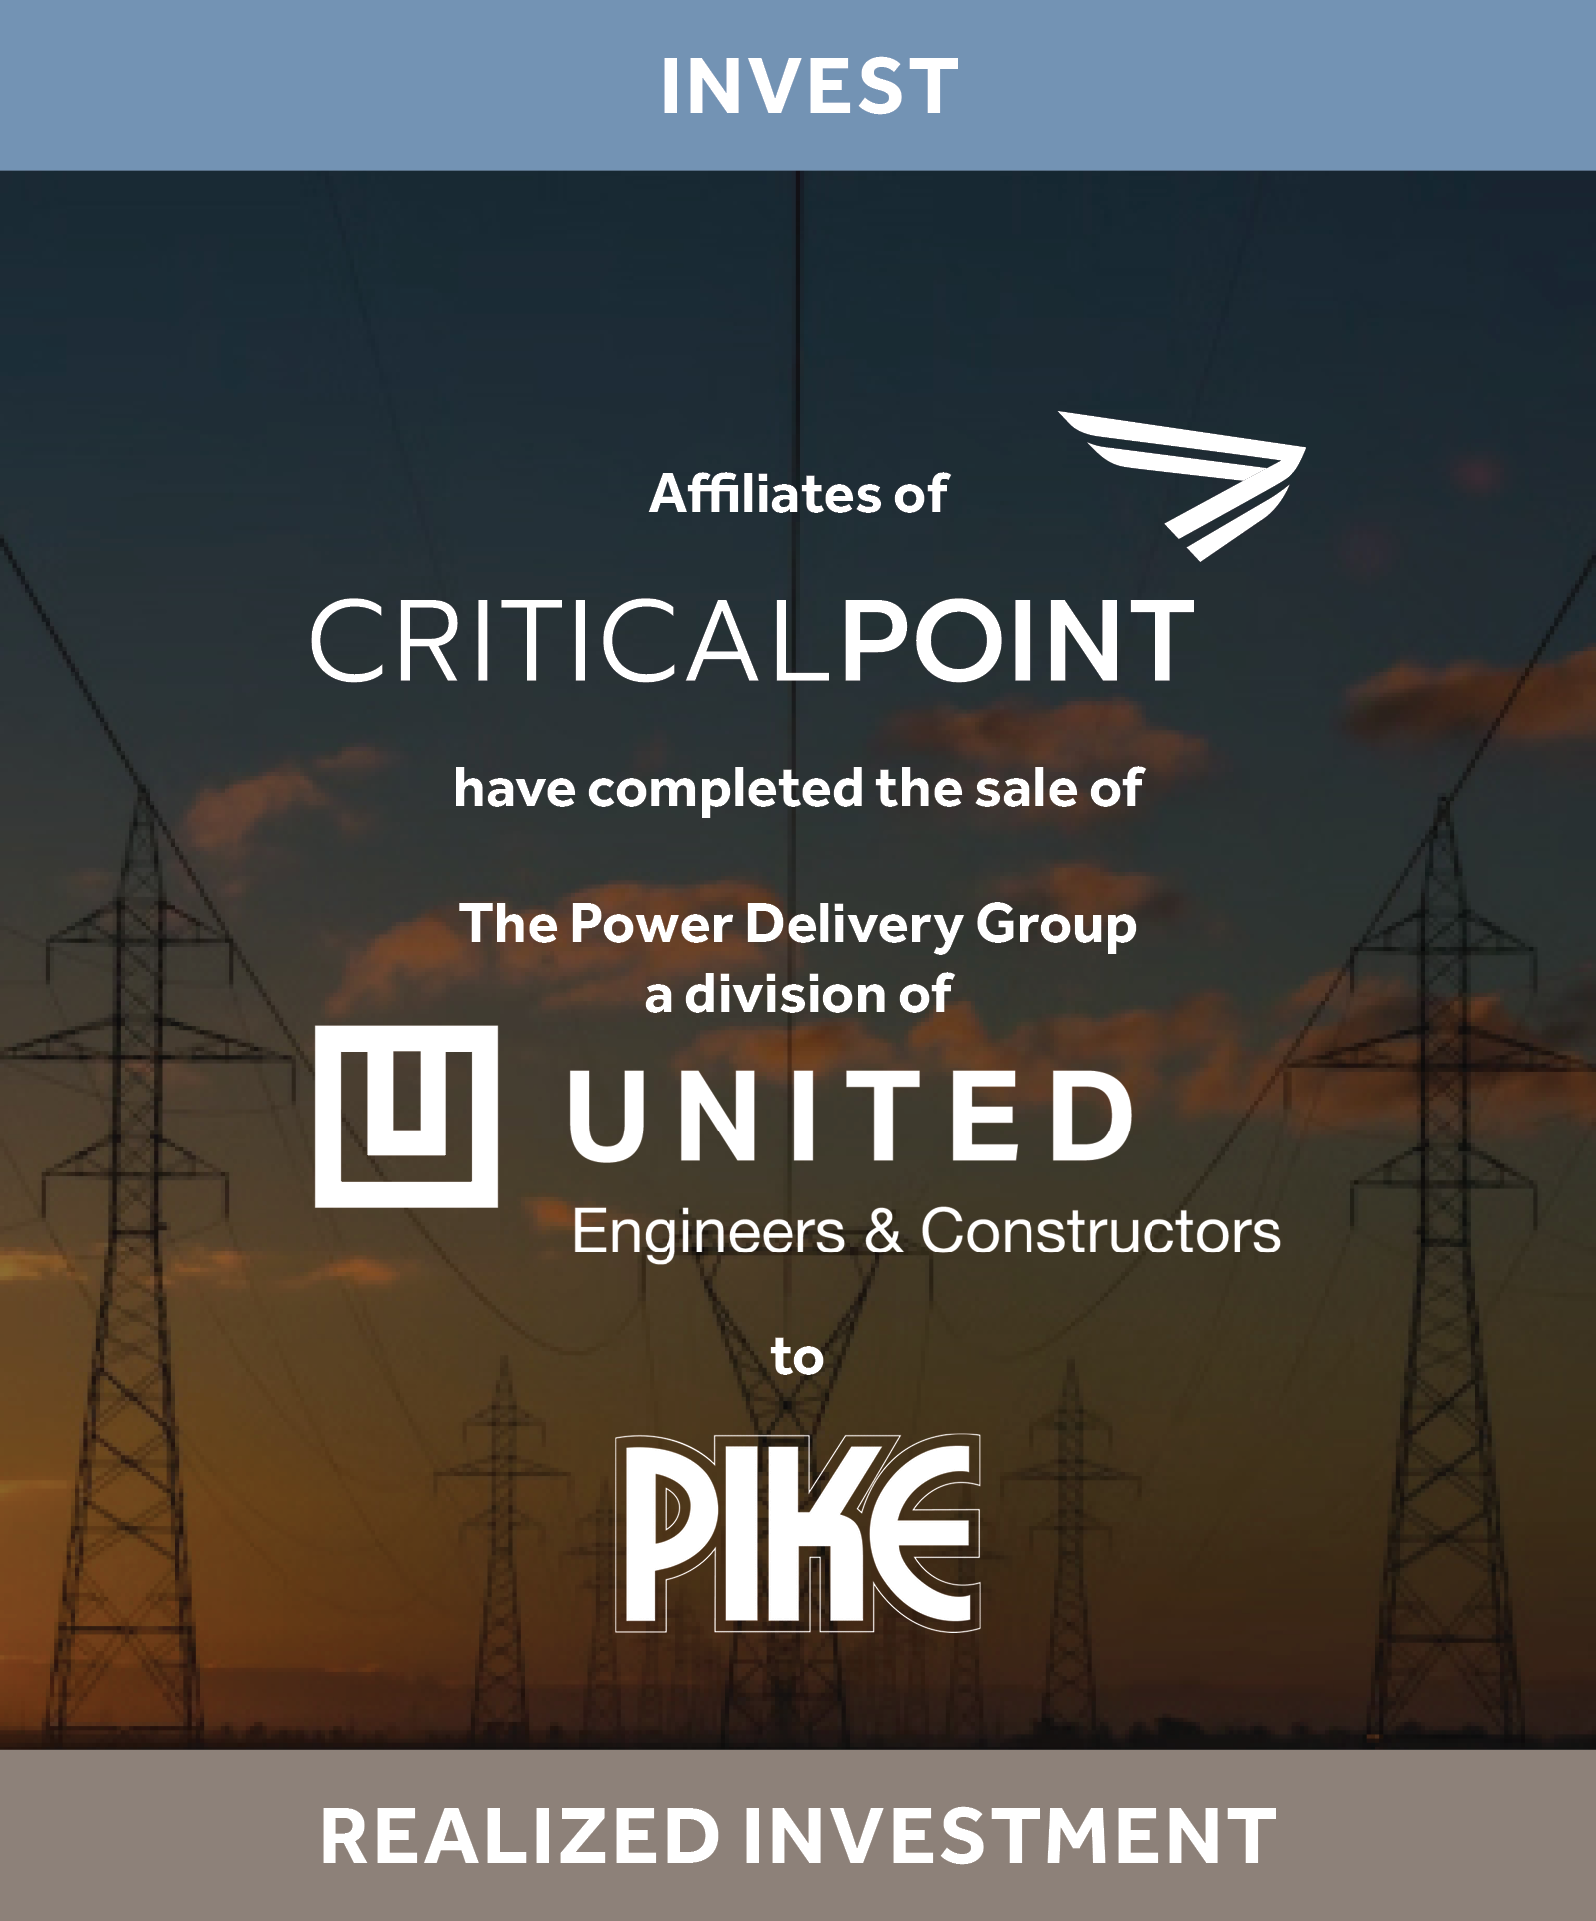 criticalpoint_united_Pike3_webstombstone